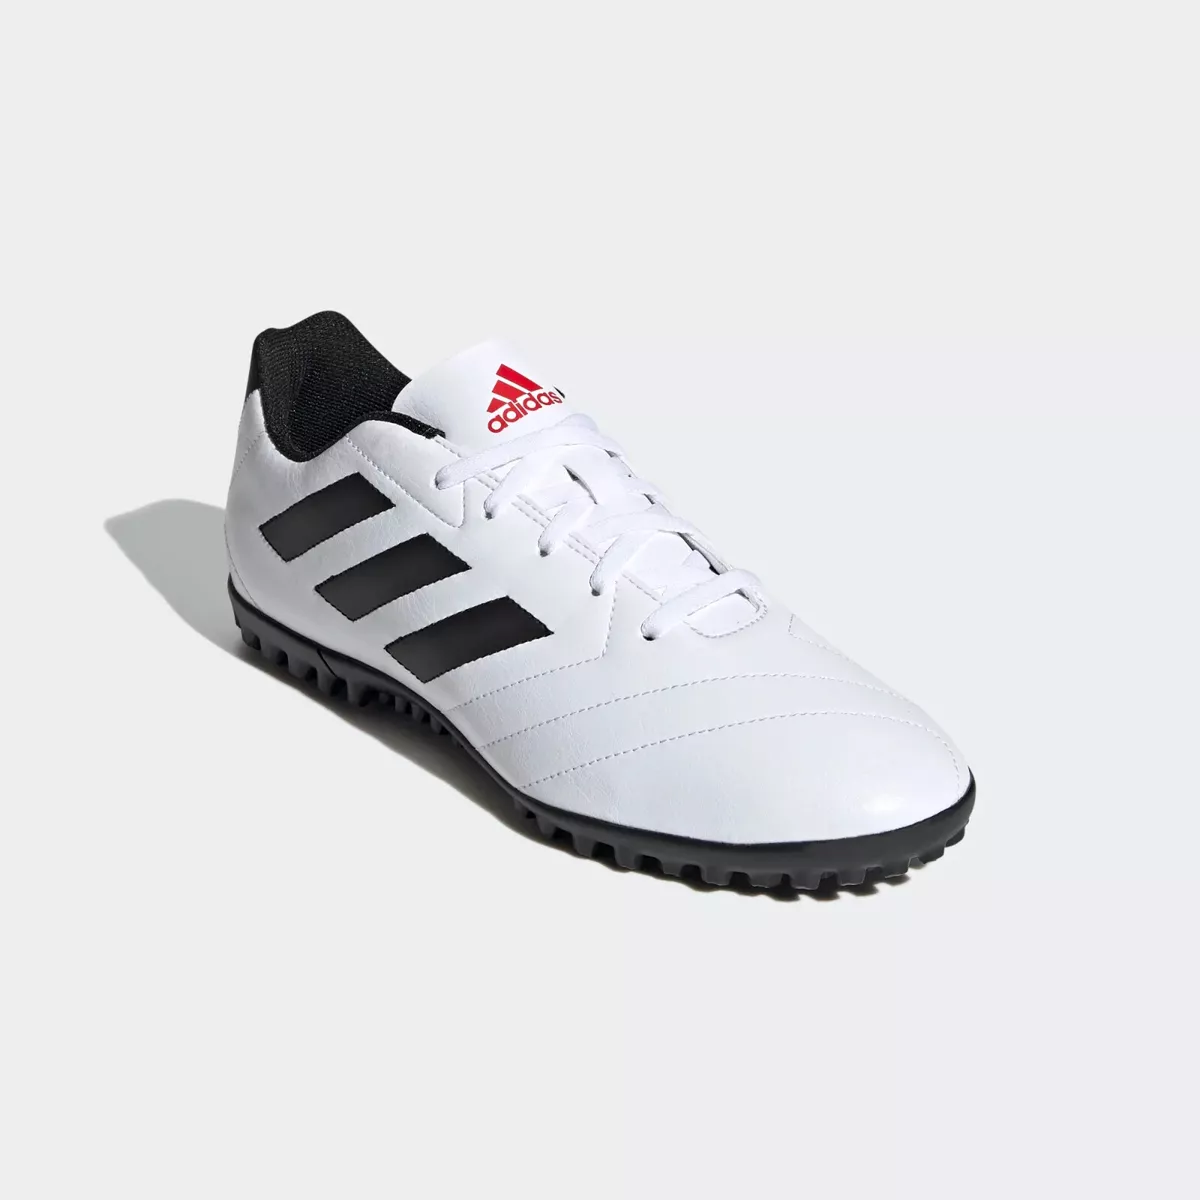 Adidas Goletto VII TF Soccer Cleats Black FV8704 Mens: 7.5 Wmns: 9.5 | eBay